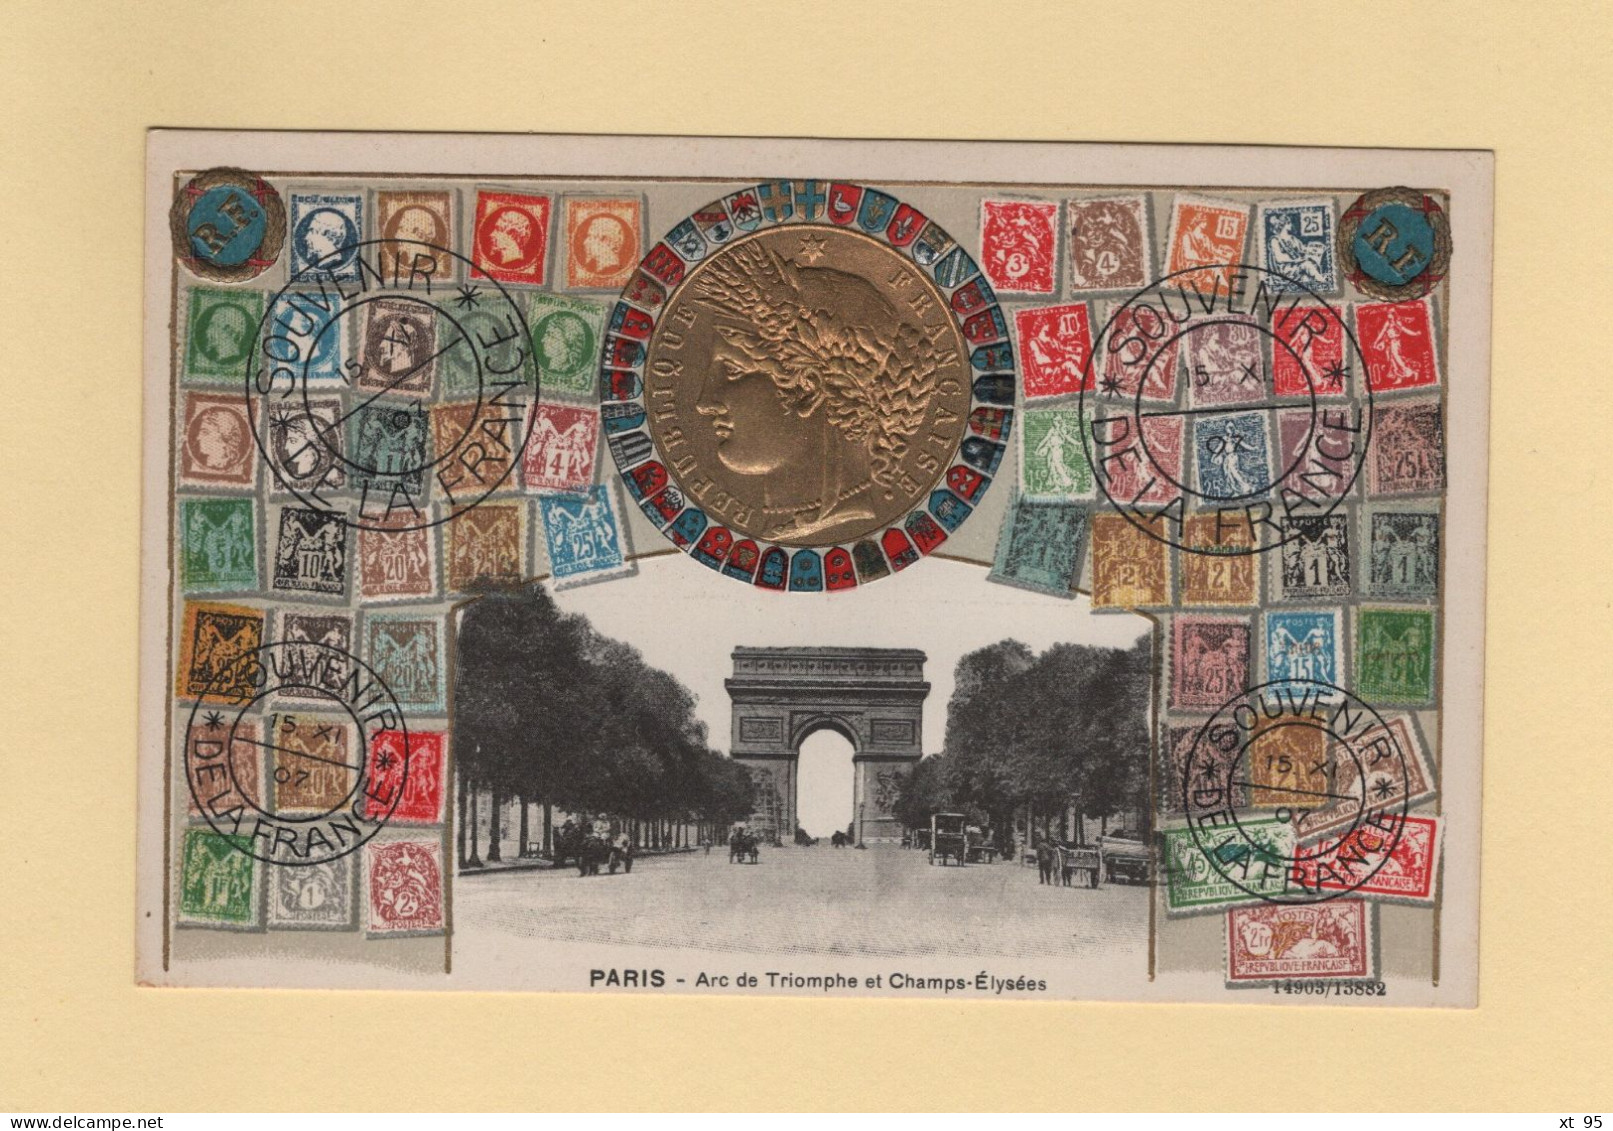 Timbres - Souvenir De La France - Paris - Arc De Triomphe Champs Elysees - Carte Gauffree - Timbres (représentations)